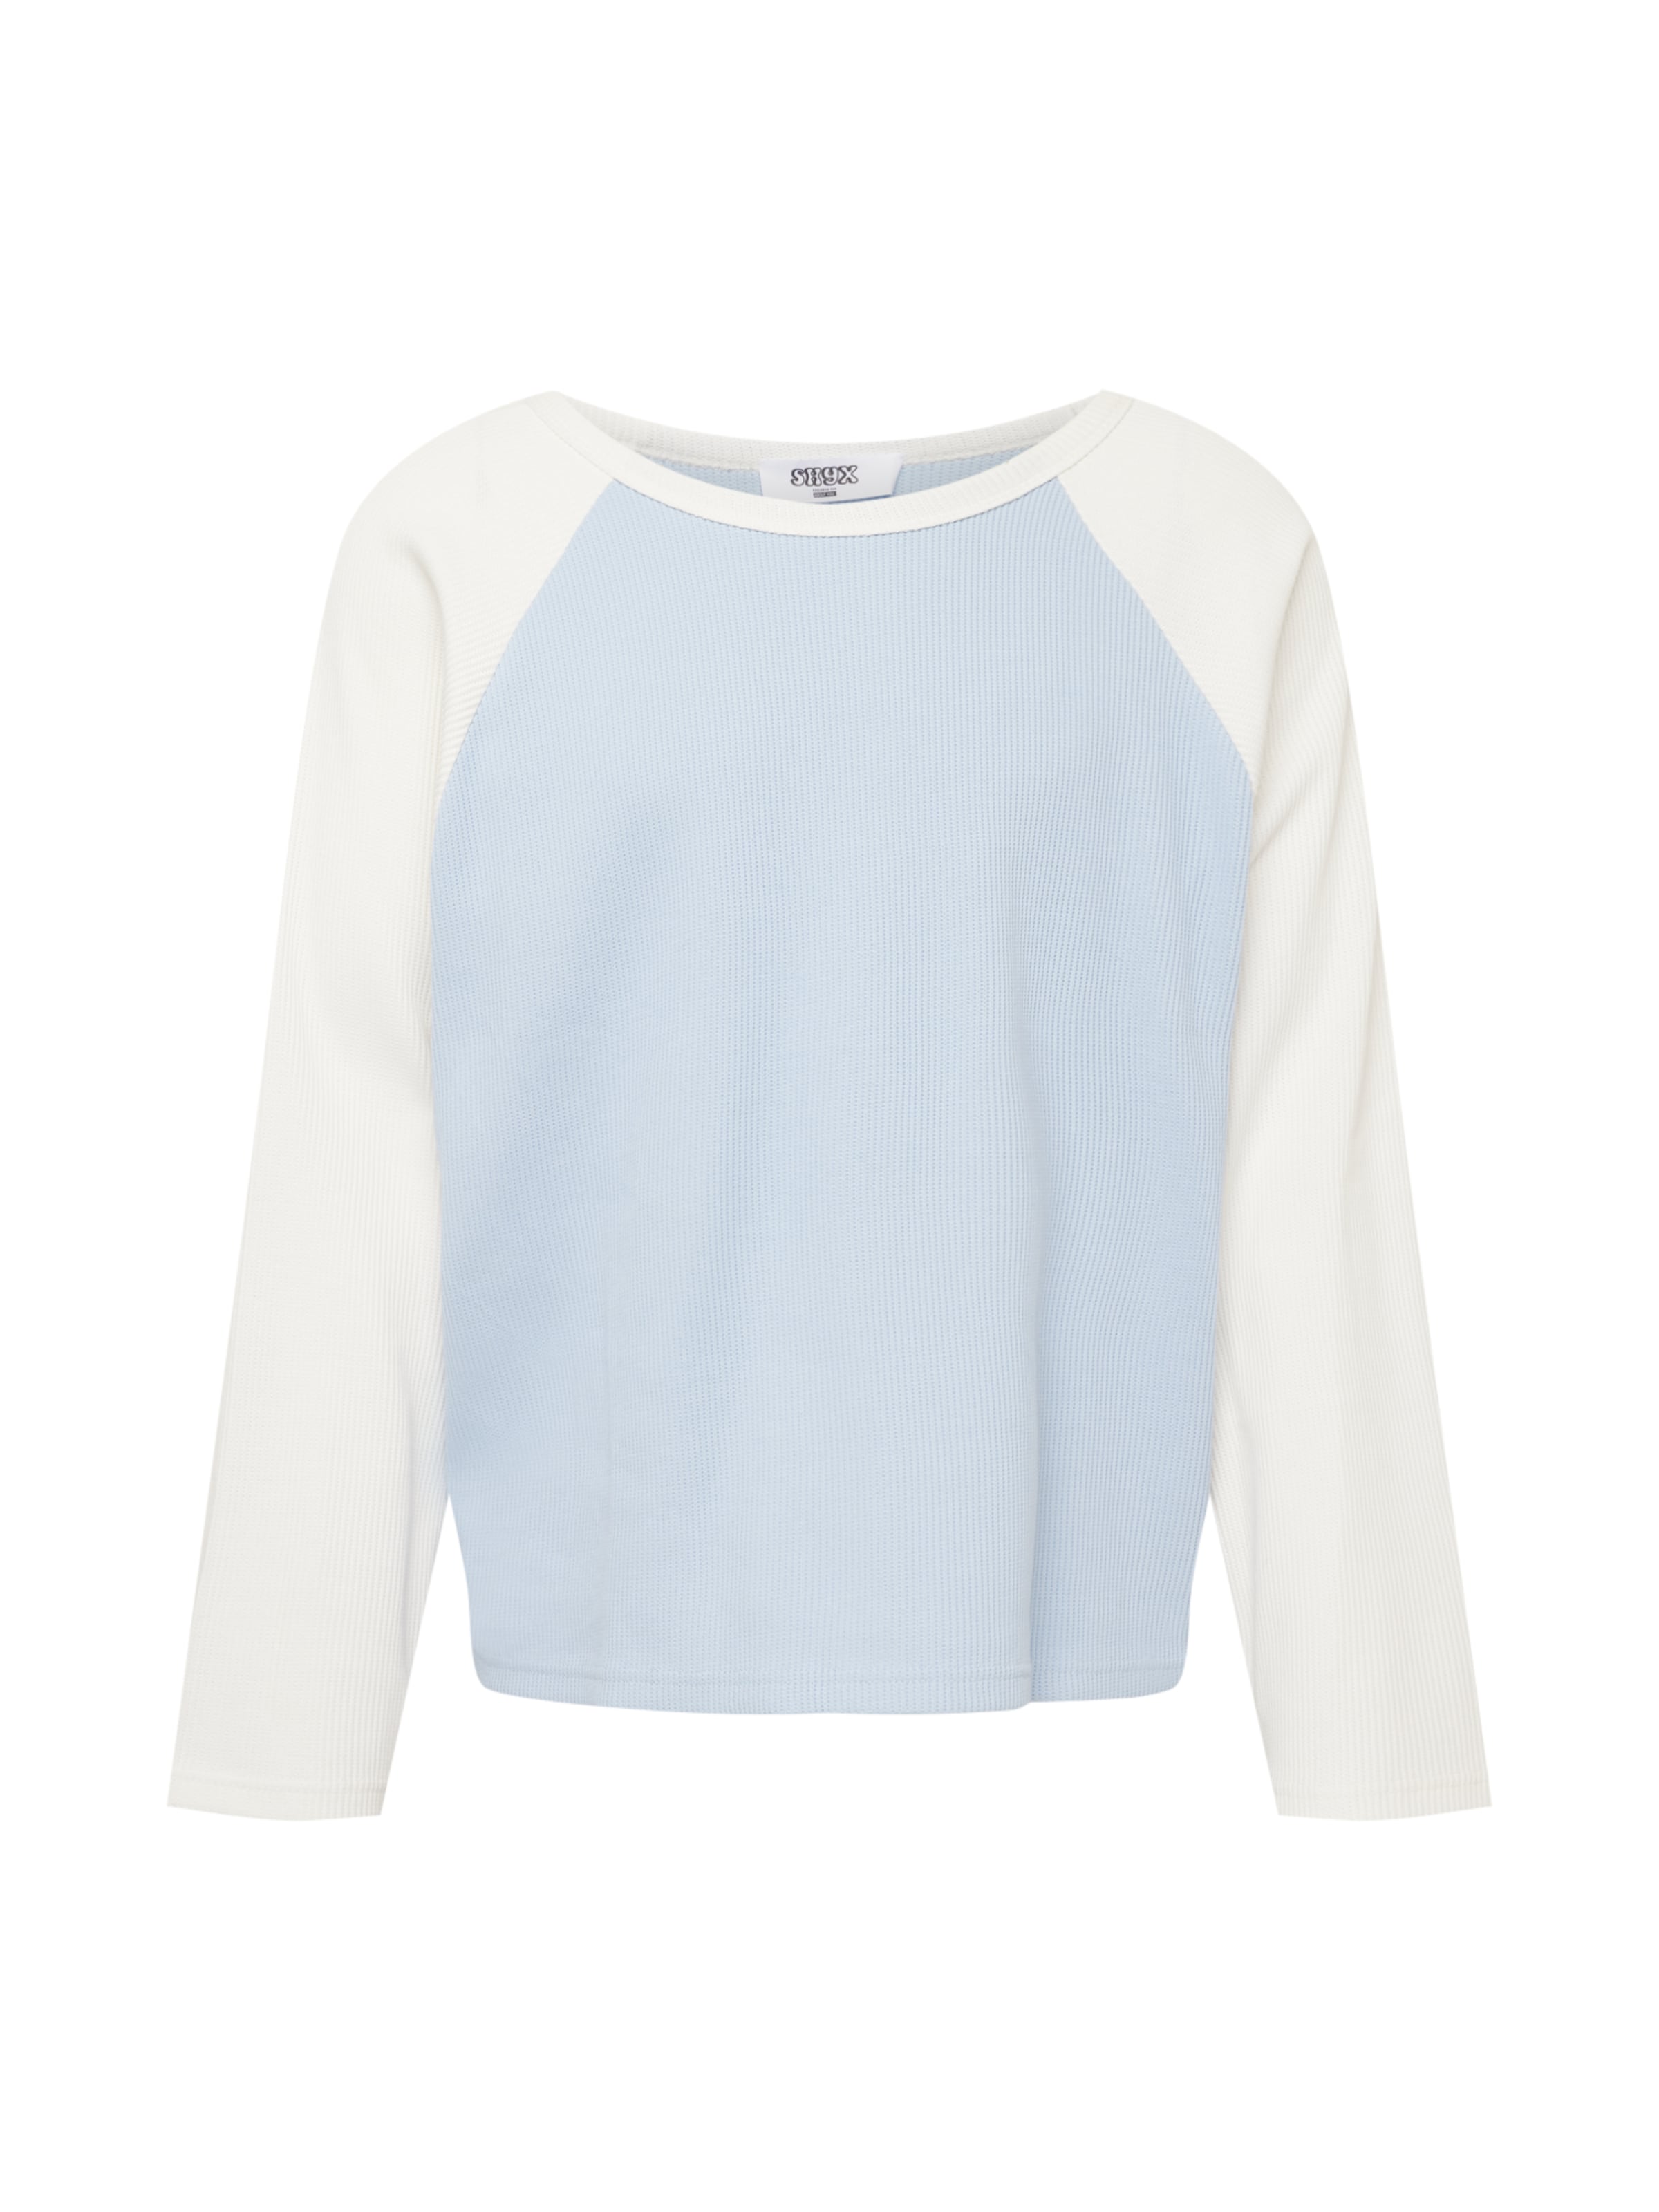 Women Tops | SHYX Shirt 'June' in White, Blue - OS78619